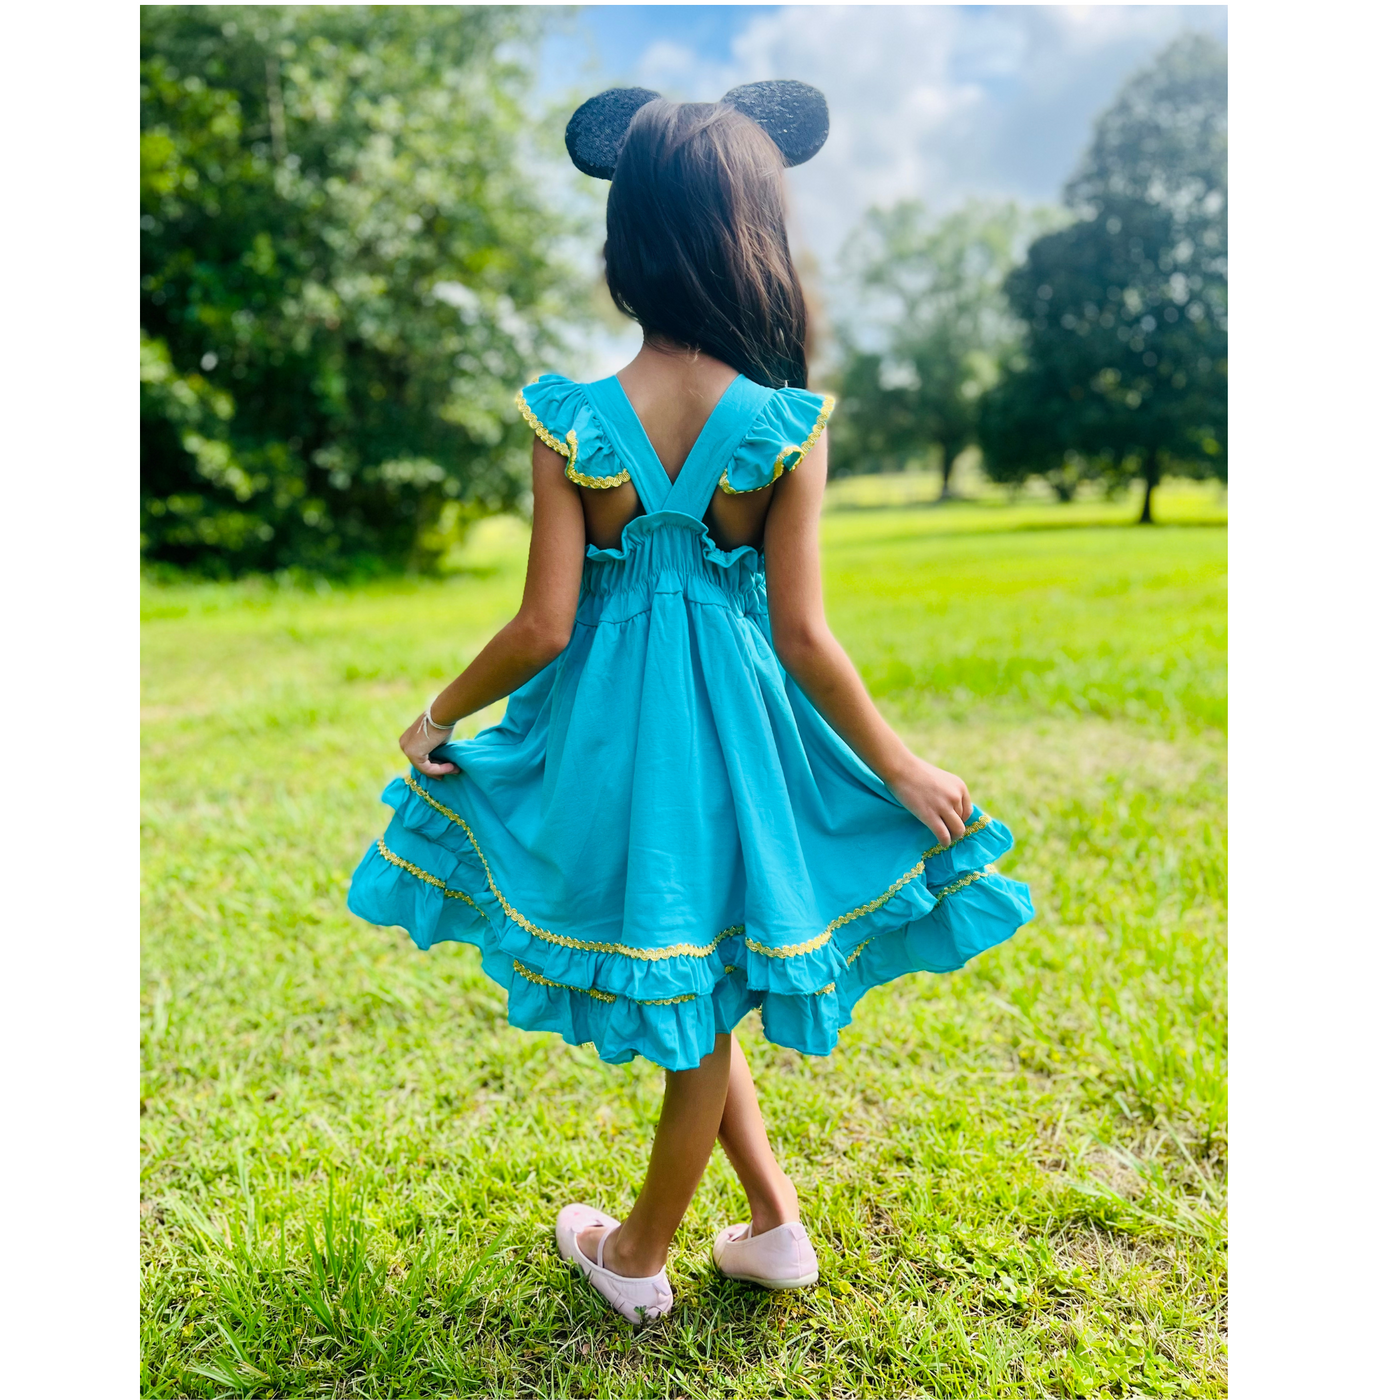 Magic Carpet Princess Dress for Girls Kids